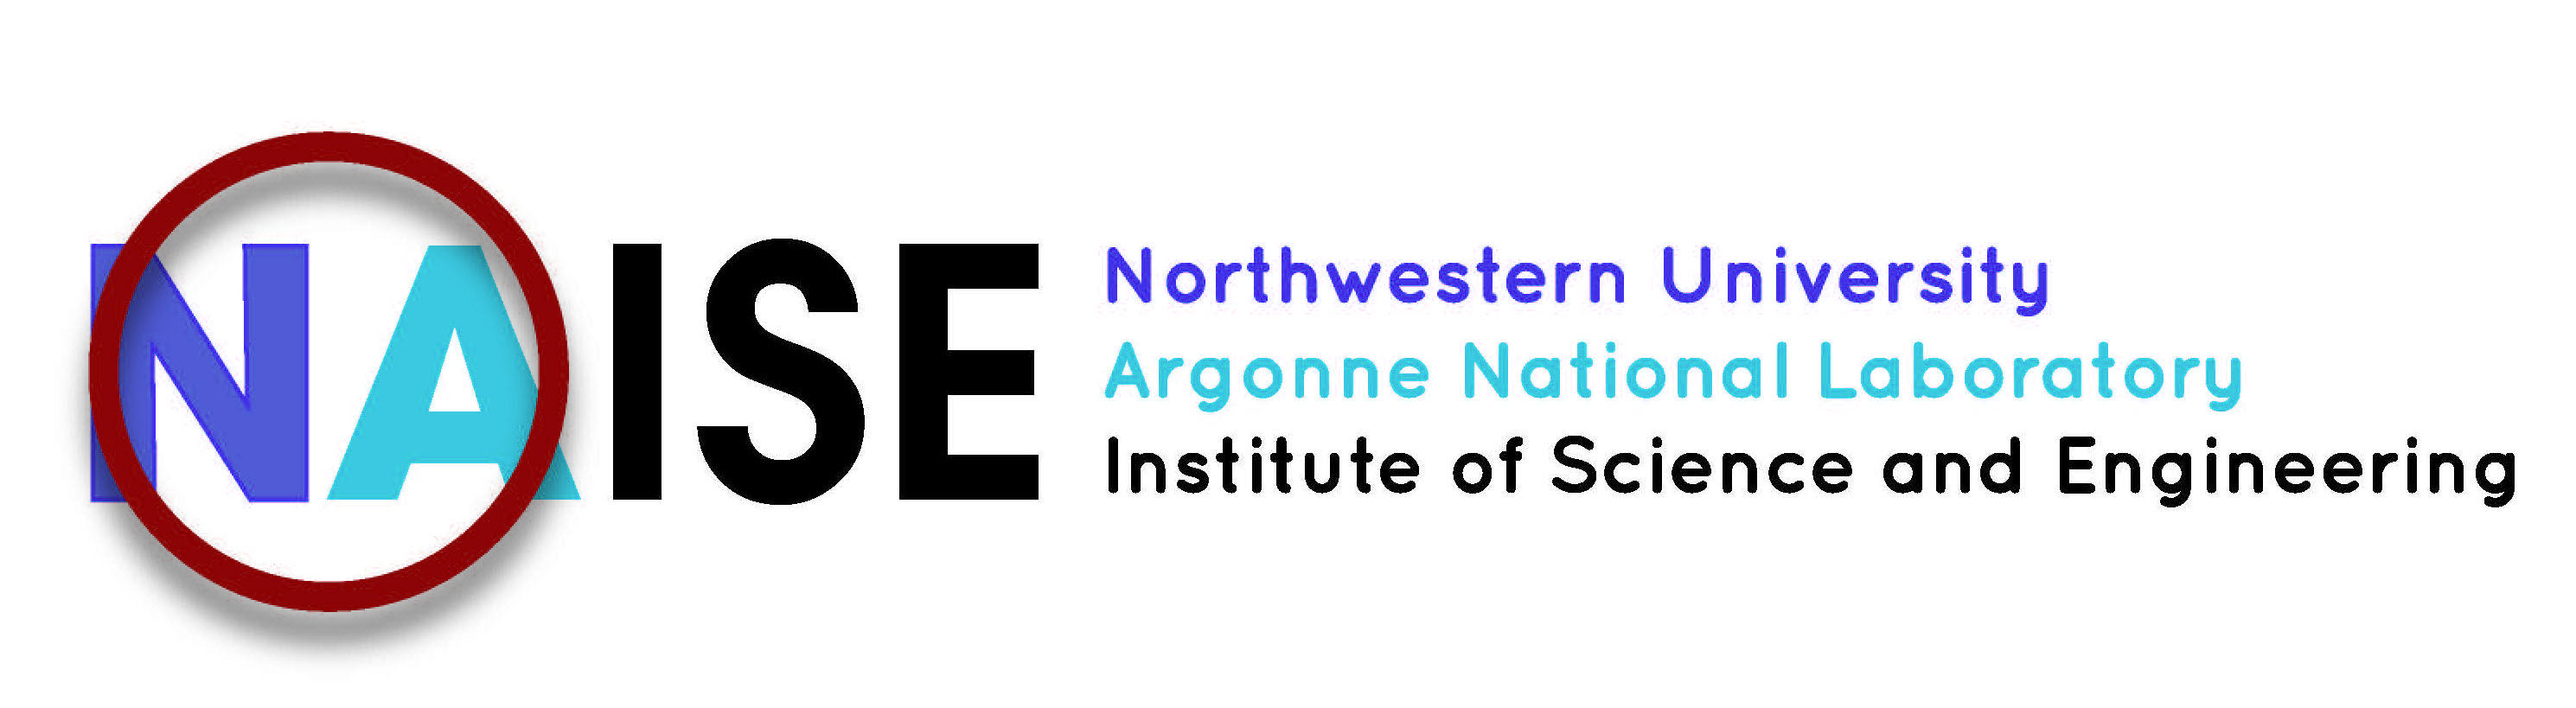 Northwestern U Logo - NAISE Institute